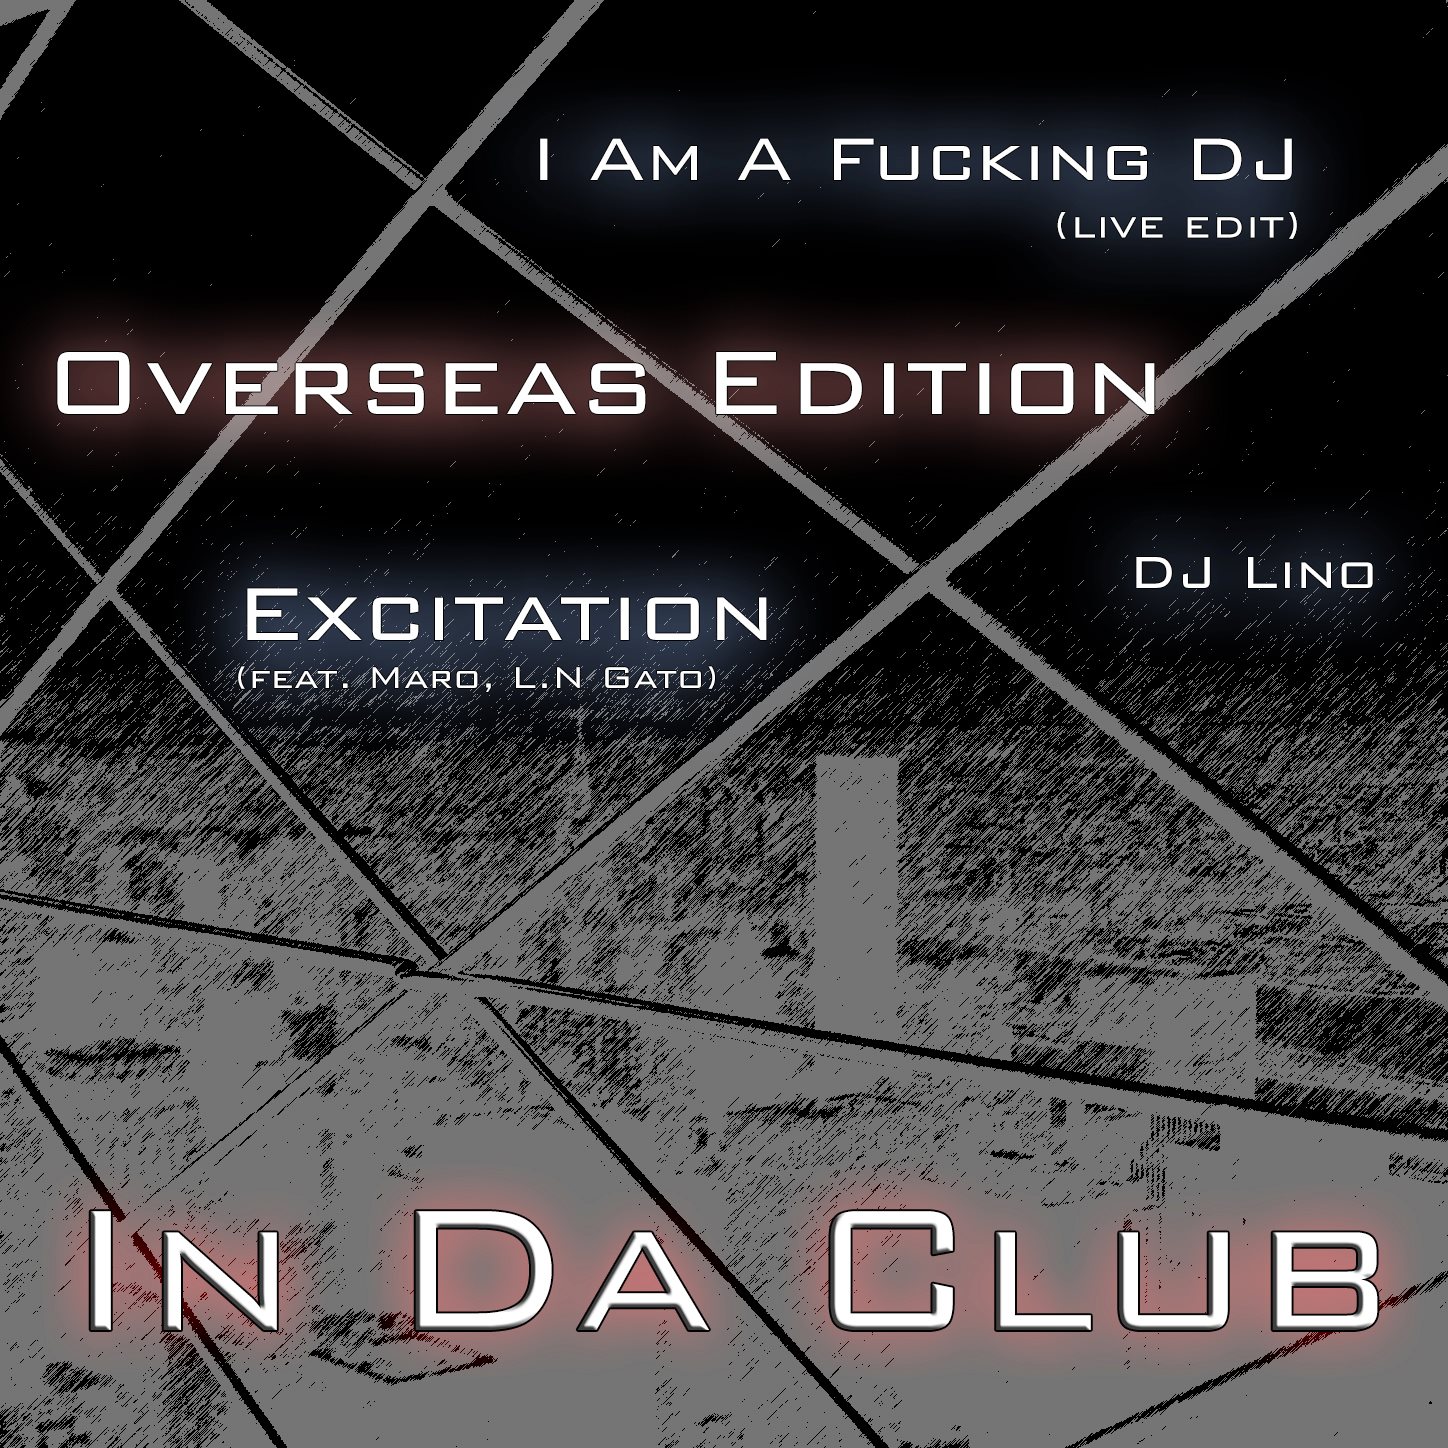 77459_444456302259033_2105026416_o.jpg : [무료] In Da Club (Overseas Edition) - DJ Lino